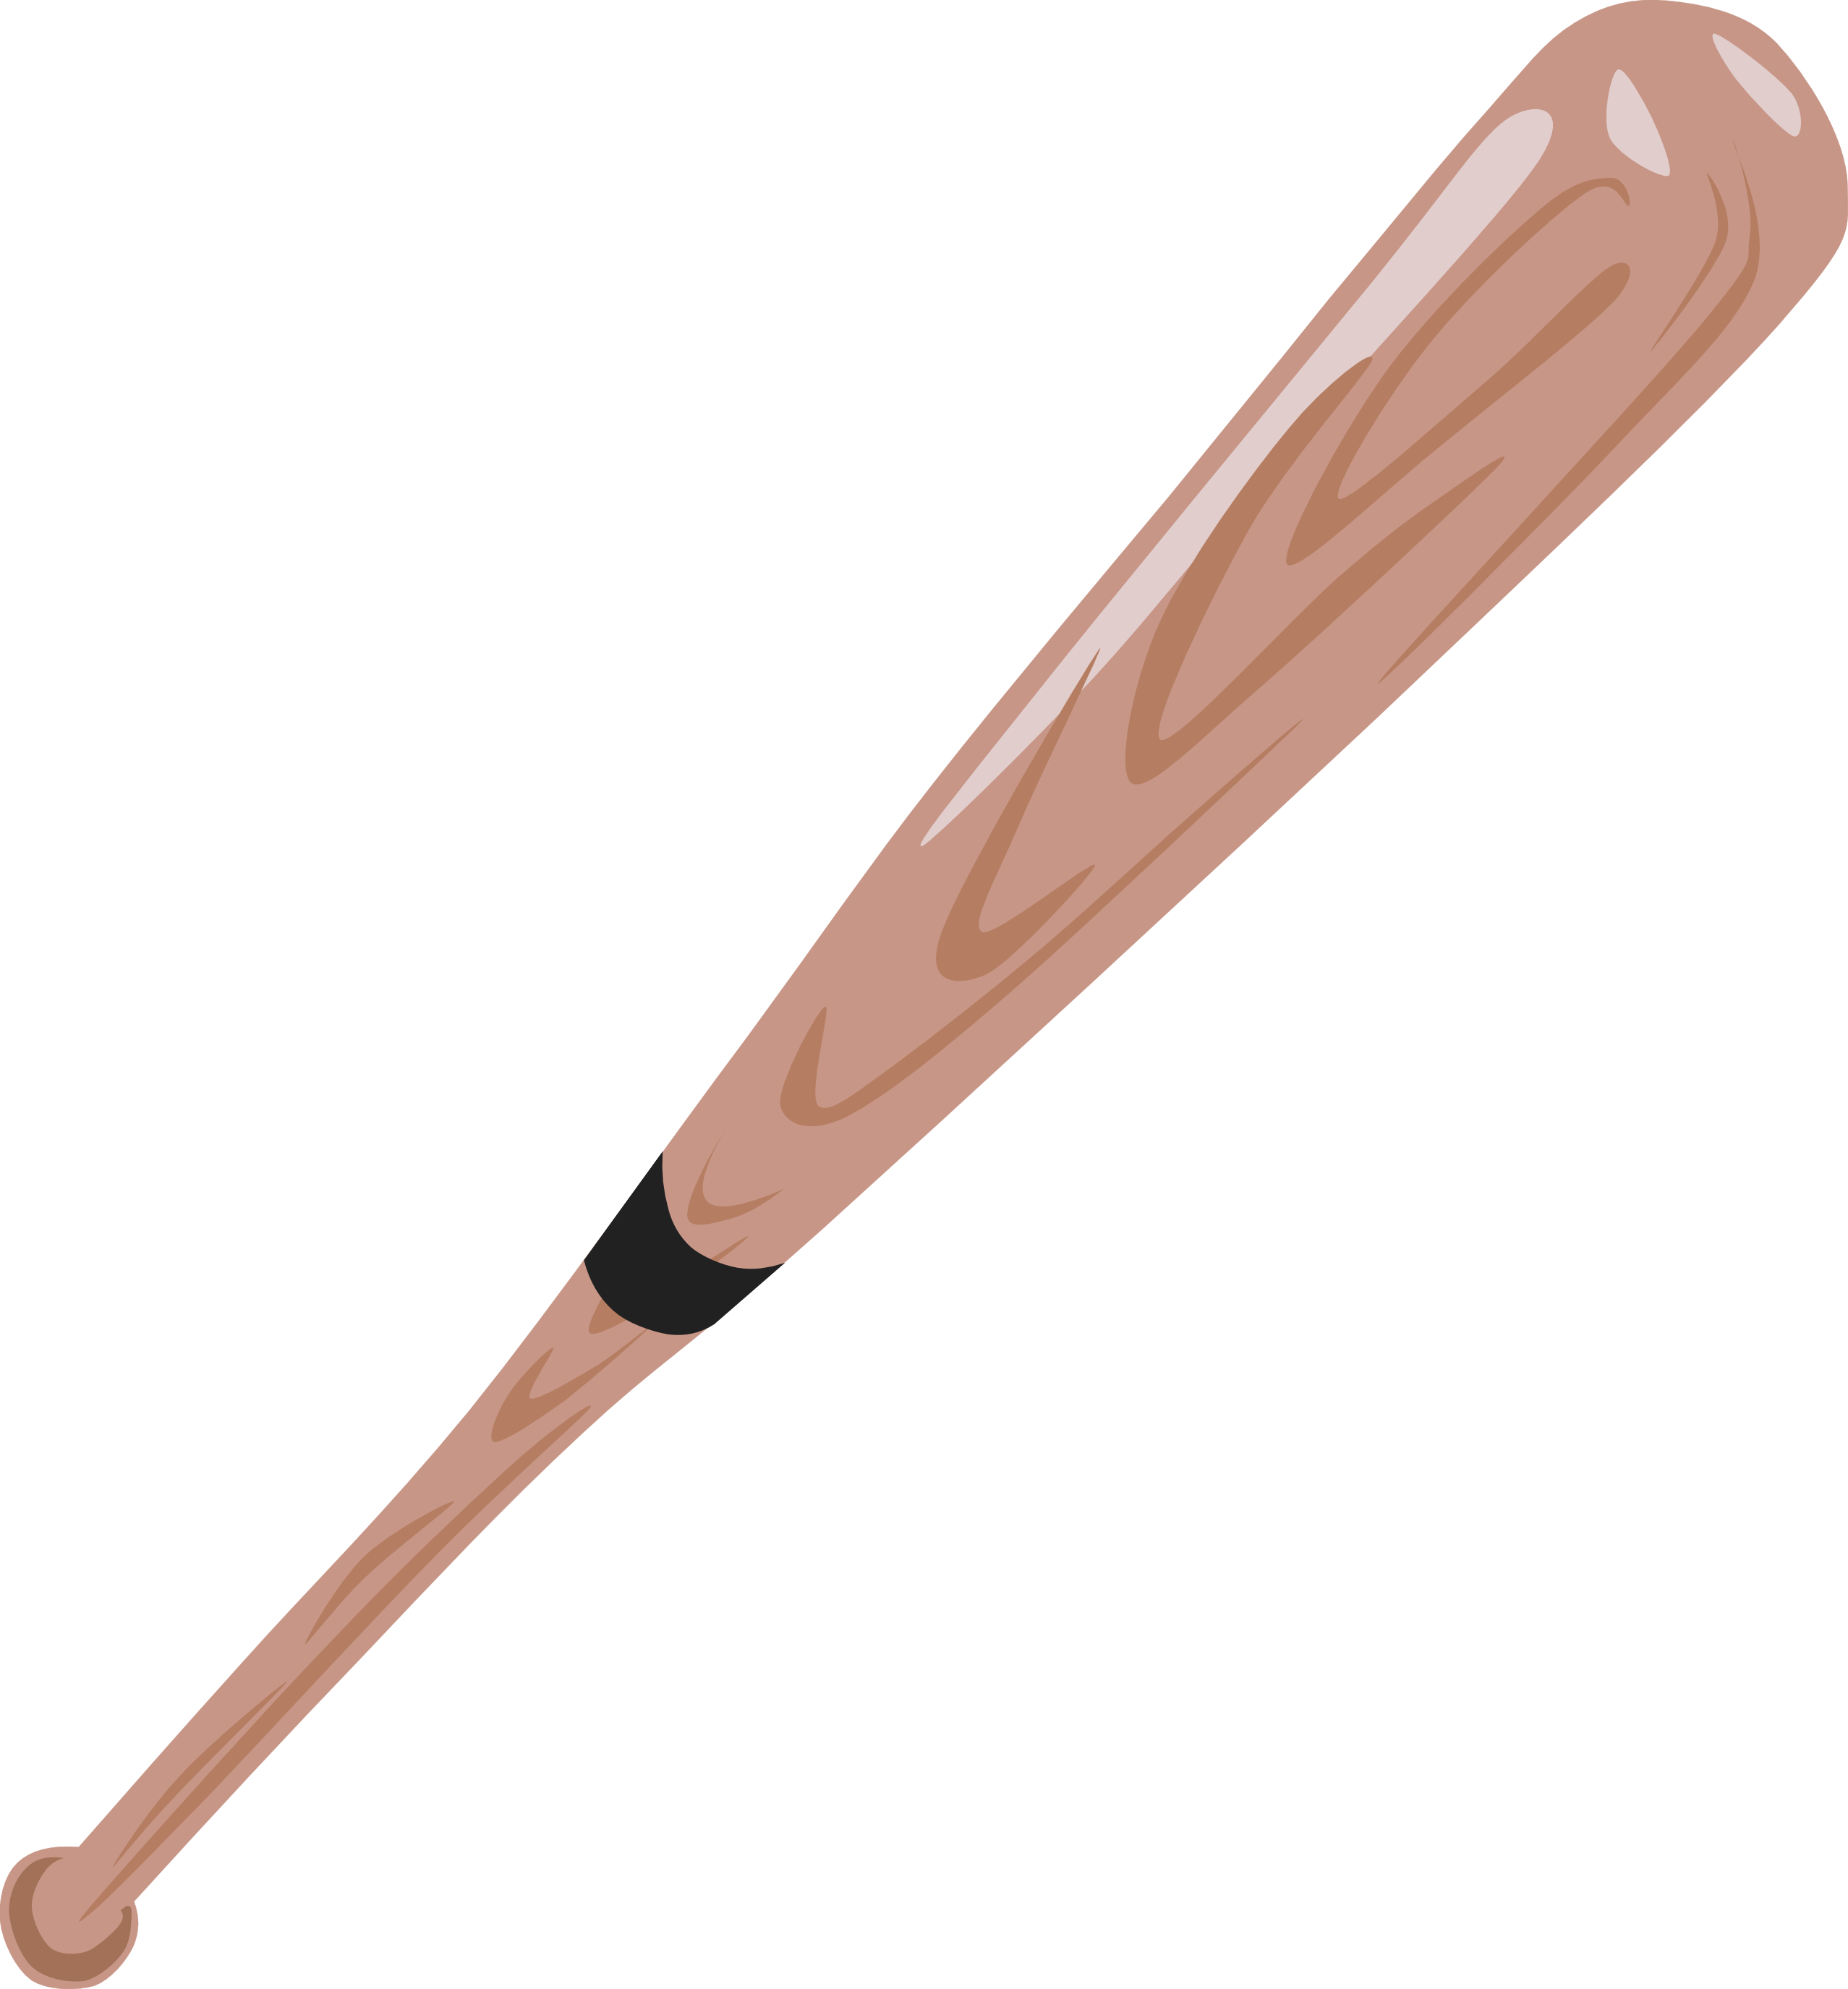 Image of Clip Art Baseball Bat #6824, Baseball Bats Free Vector ...